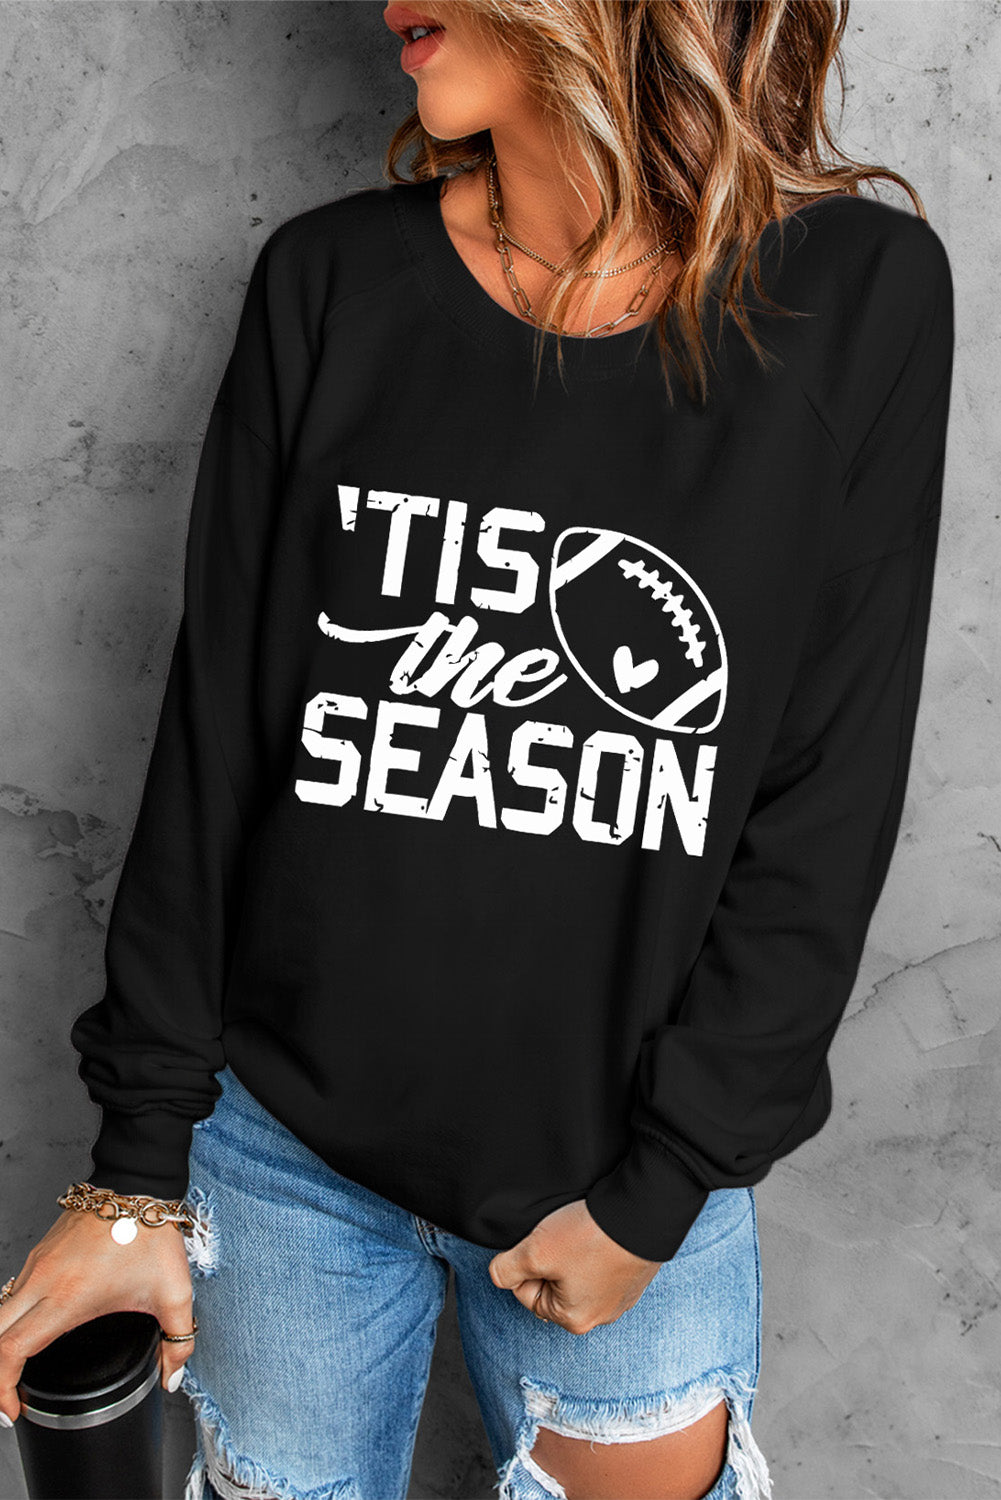 Tis The Season Football Graphic Round Neck Sweatshirt